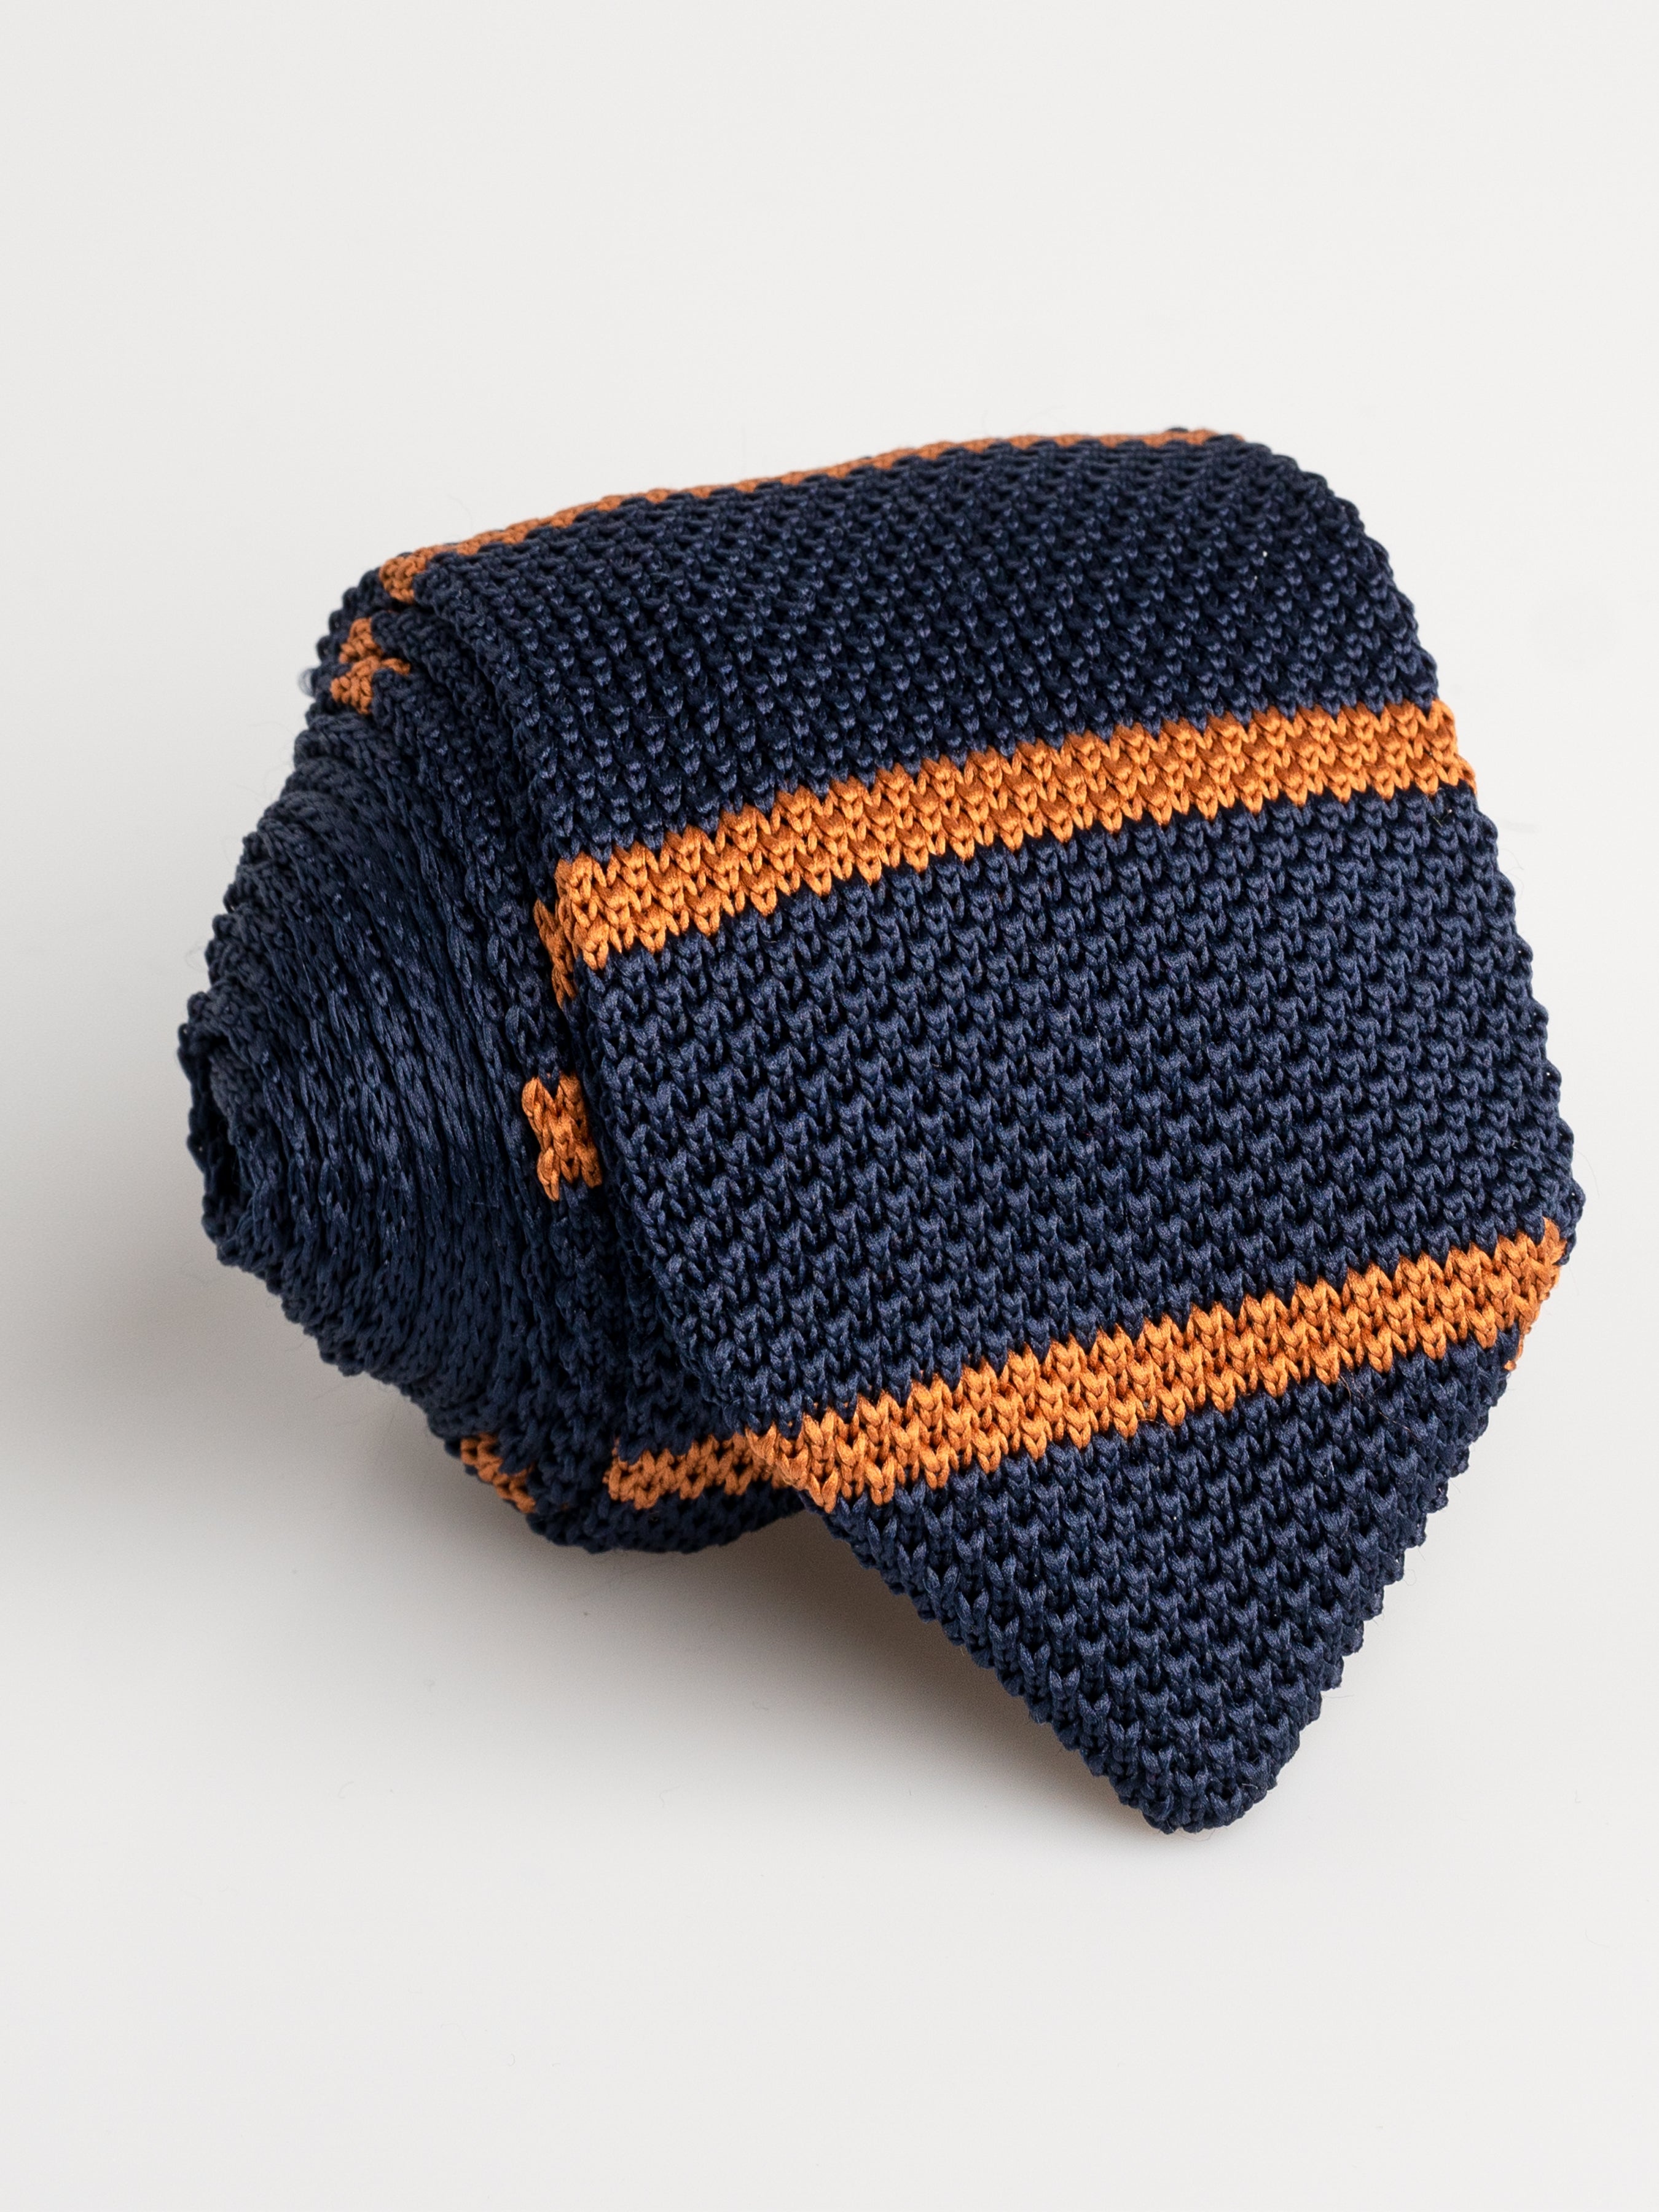 Knit Tie - Navy Blue With Light Orange Stripes